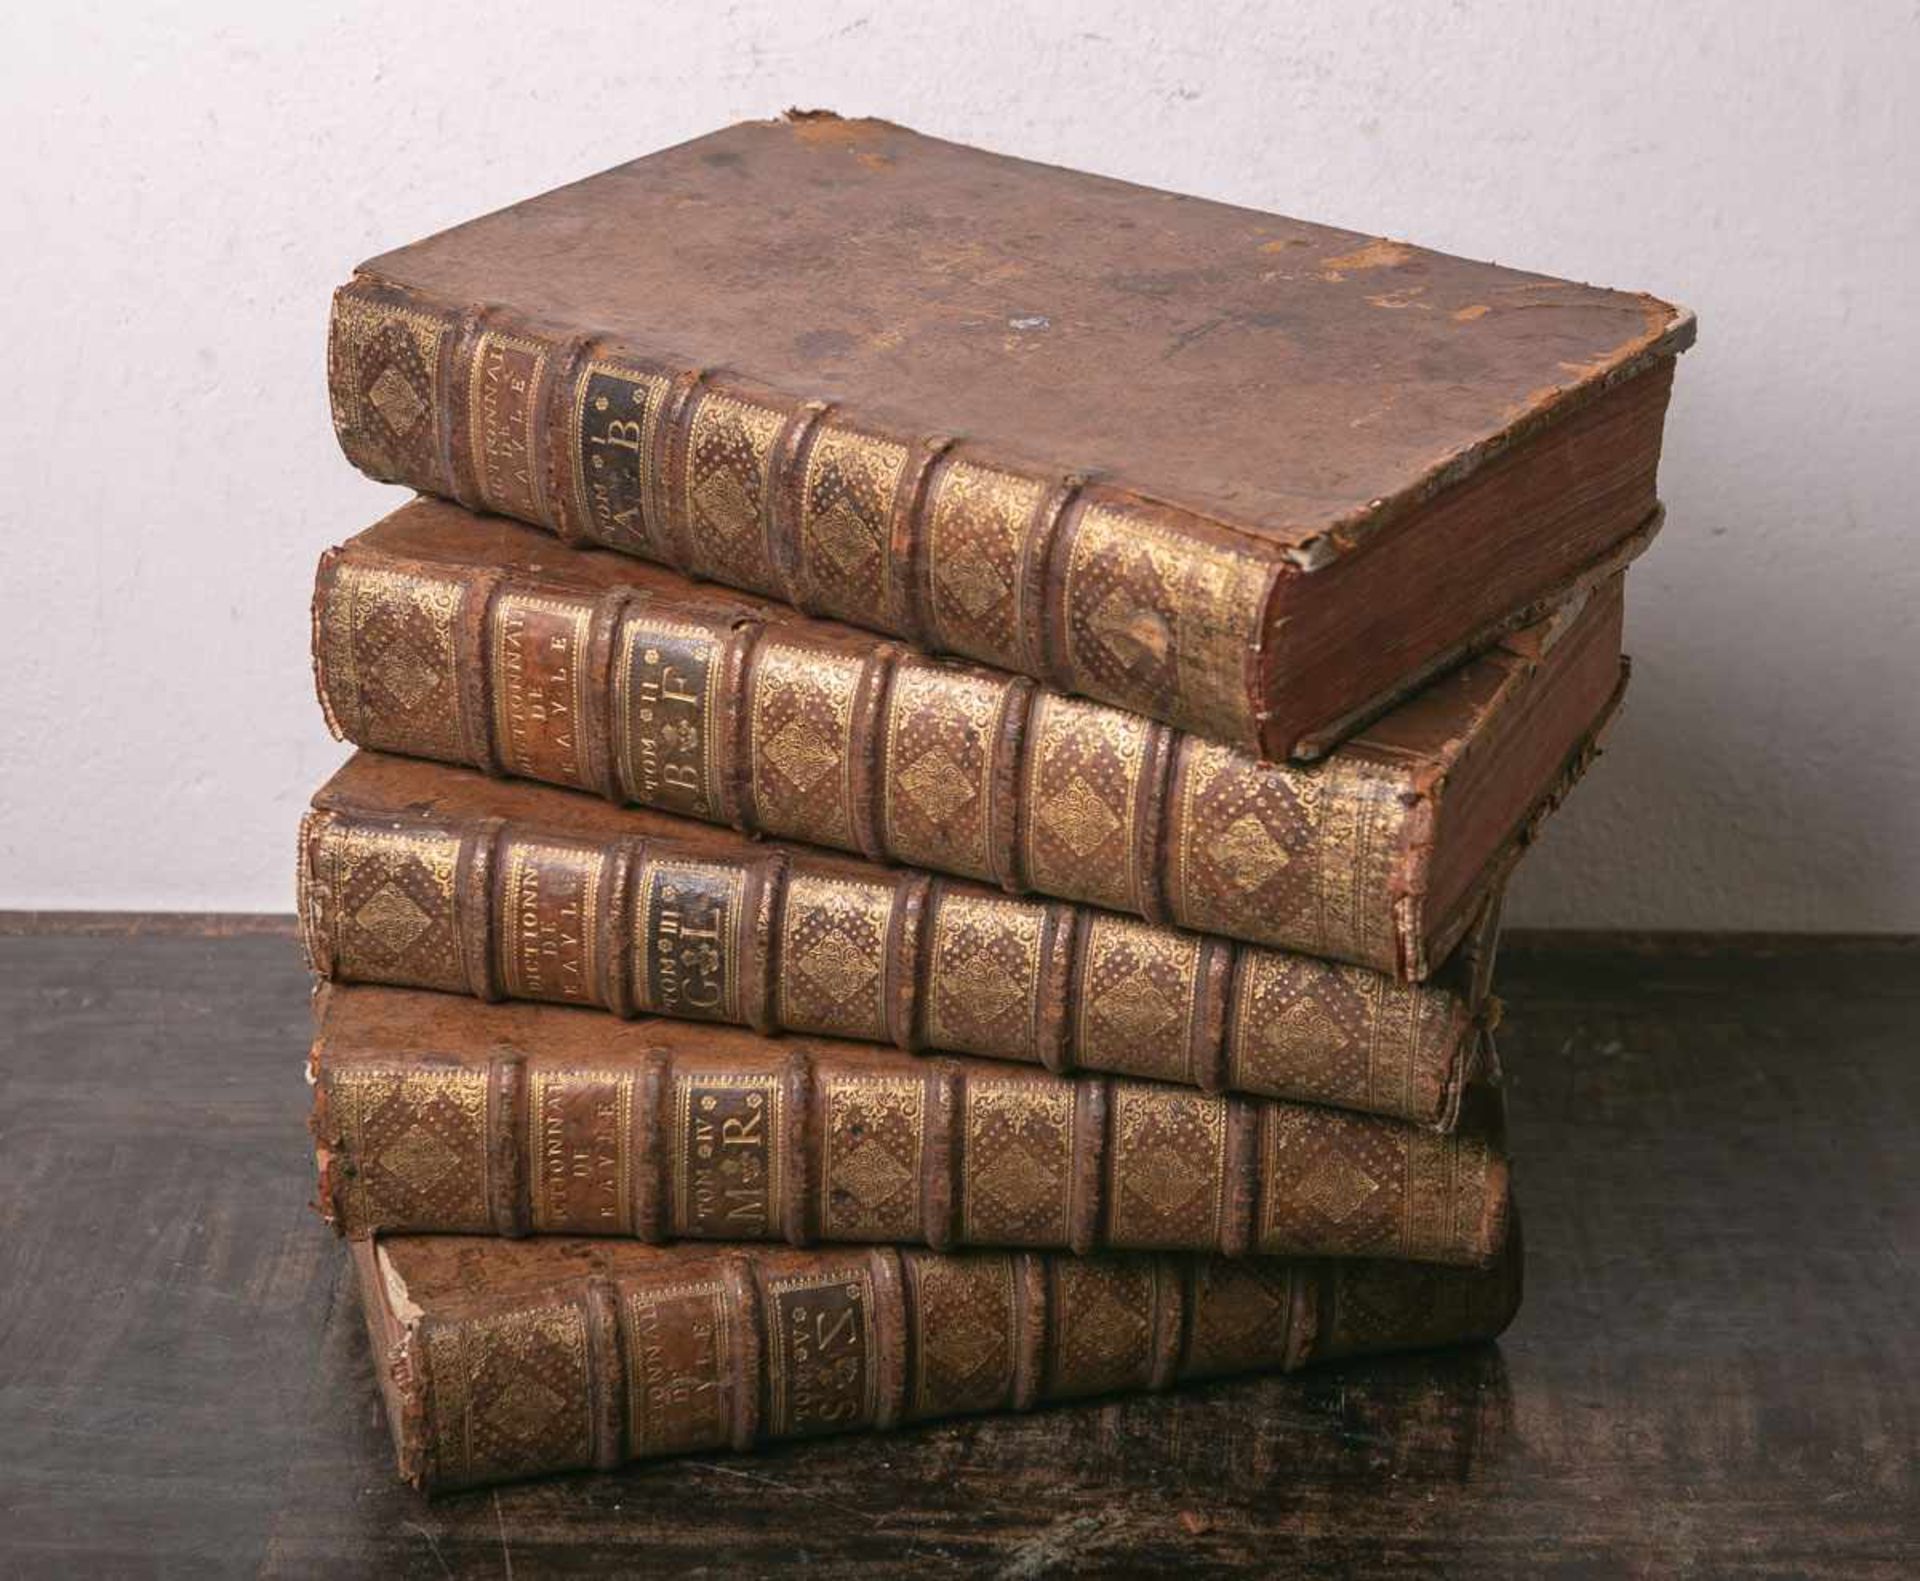 Bayle, Pierre, "Dictionaire Historique et Critique", 1734, fünf Bände, Ledereinbände mit<br